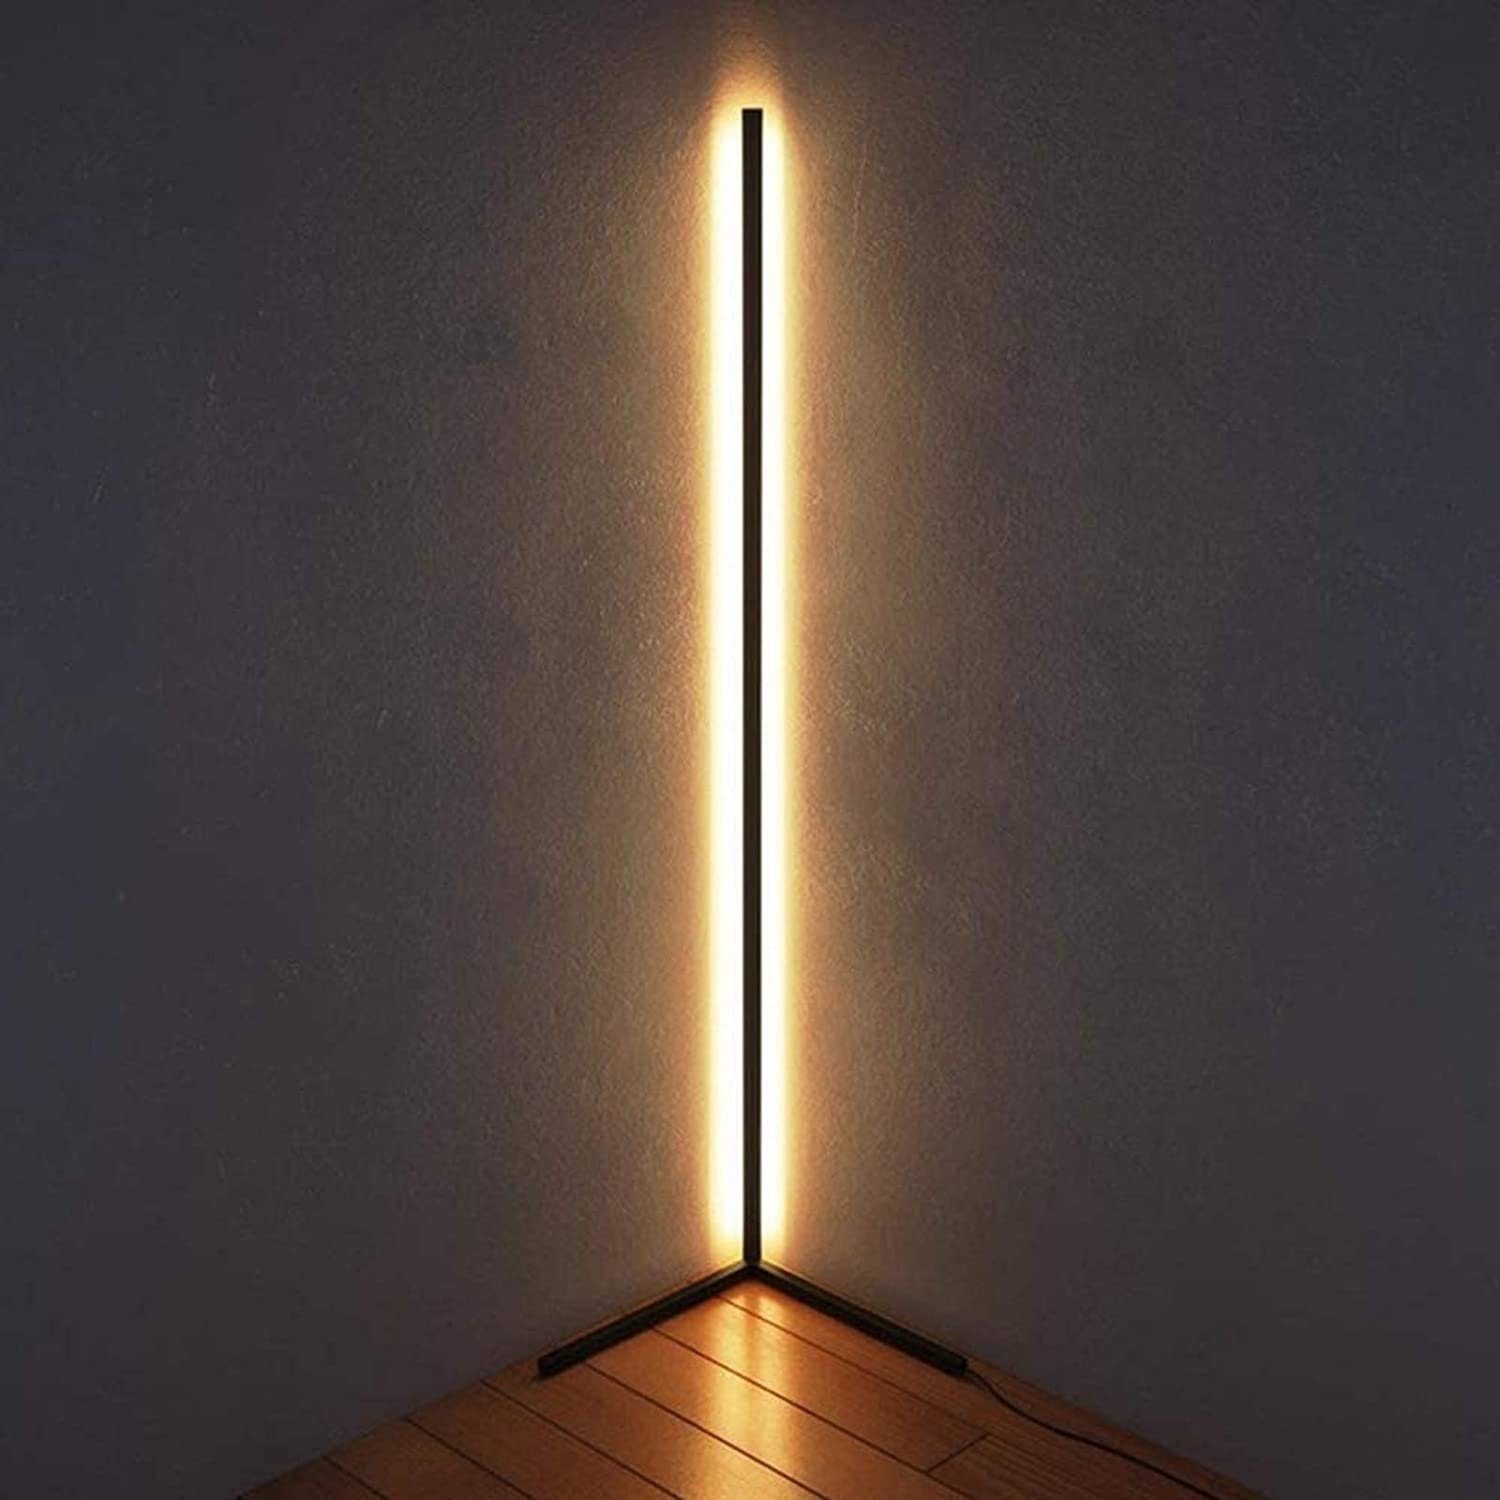 Jiuanzm LED Stehlampe »Ecklampe«, indirekts LED Lampe, 3500 k Warmweiß